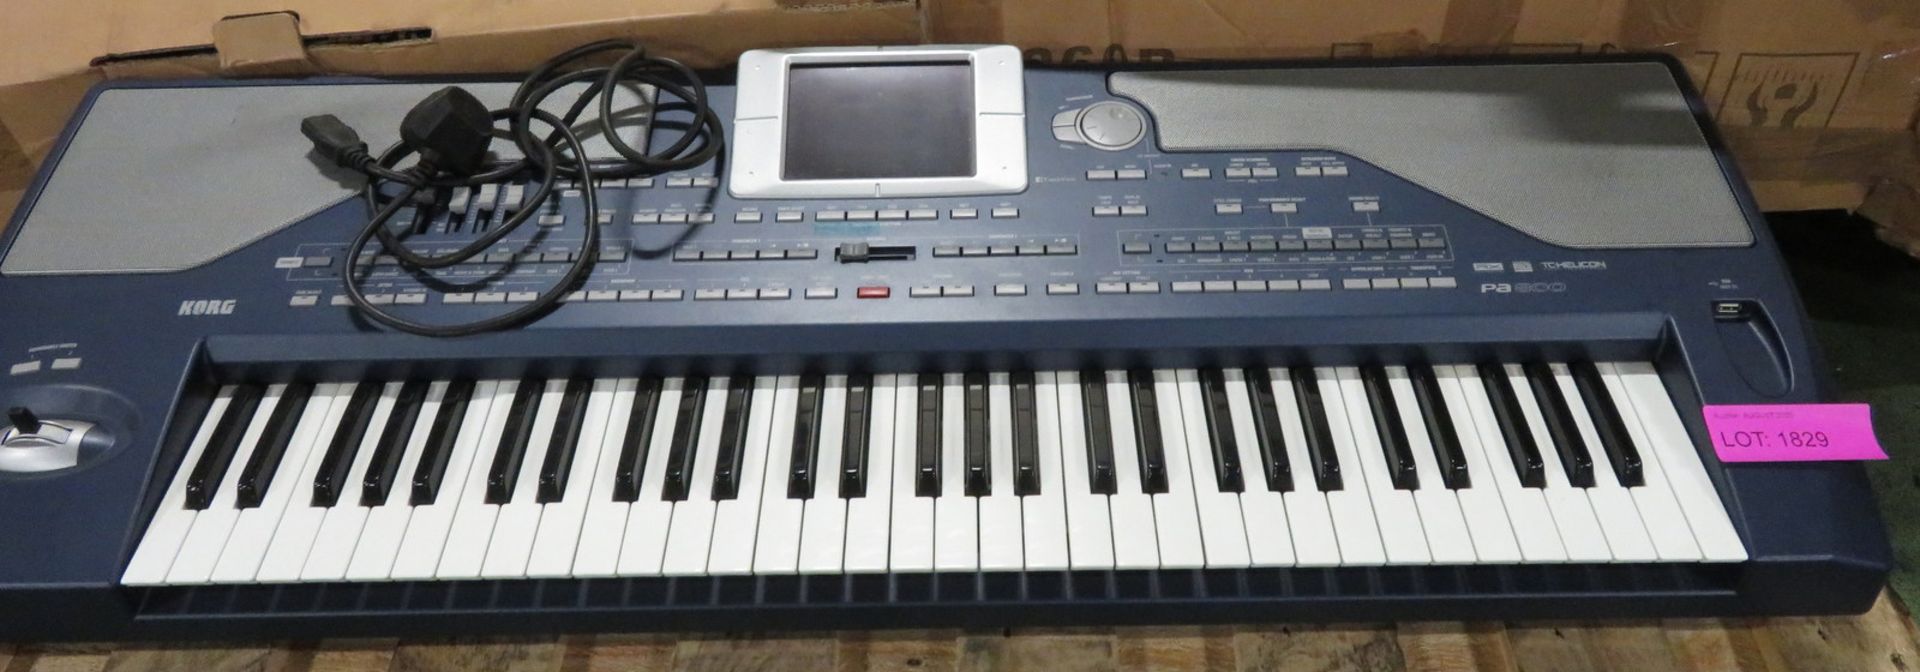 Korg PA800 electronic keyboard - Image 2 of 4